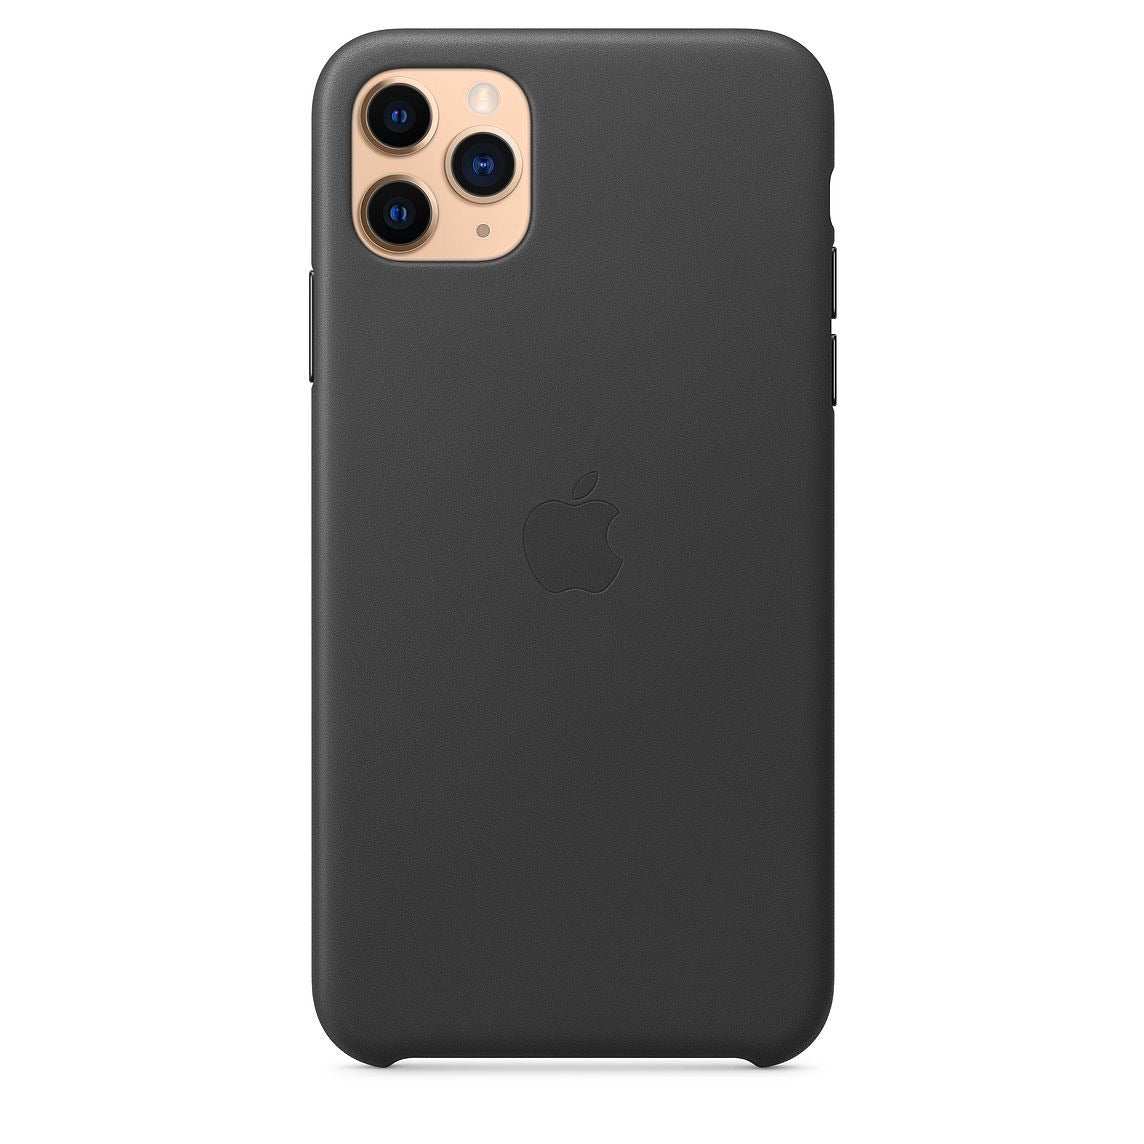 Original Iphone 11 pro max leather case black color apple